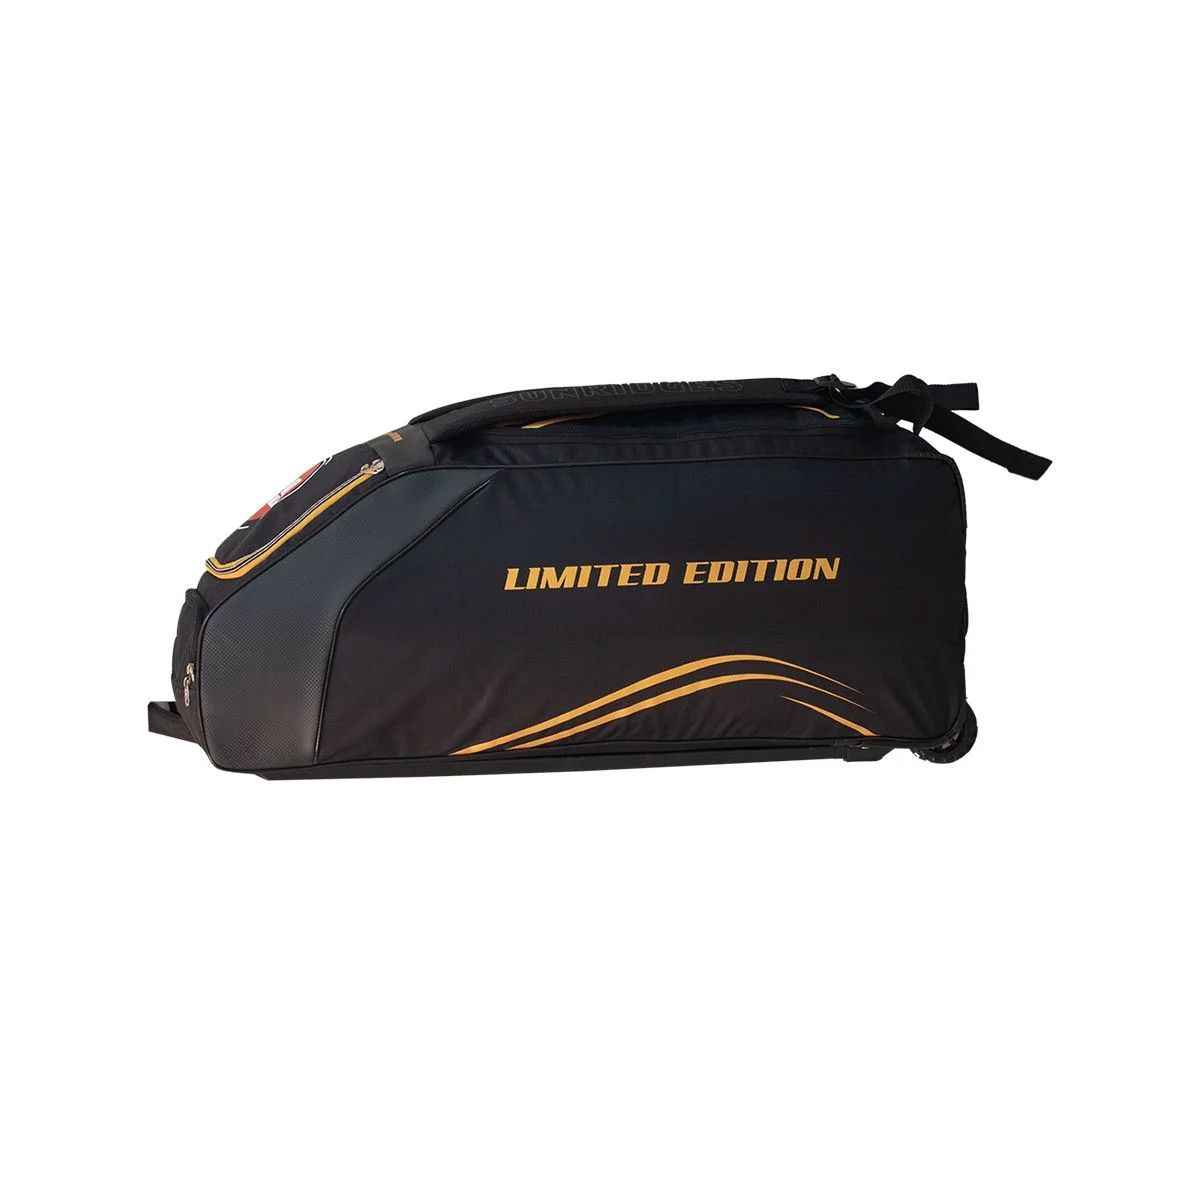 GM 606 Wheelie Cricket Kit Bag 